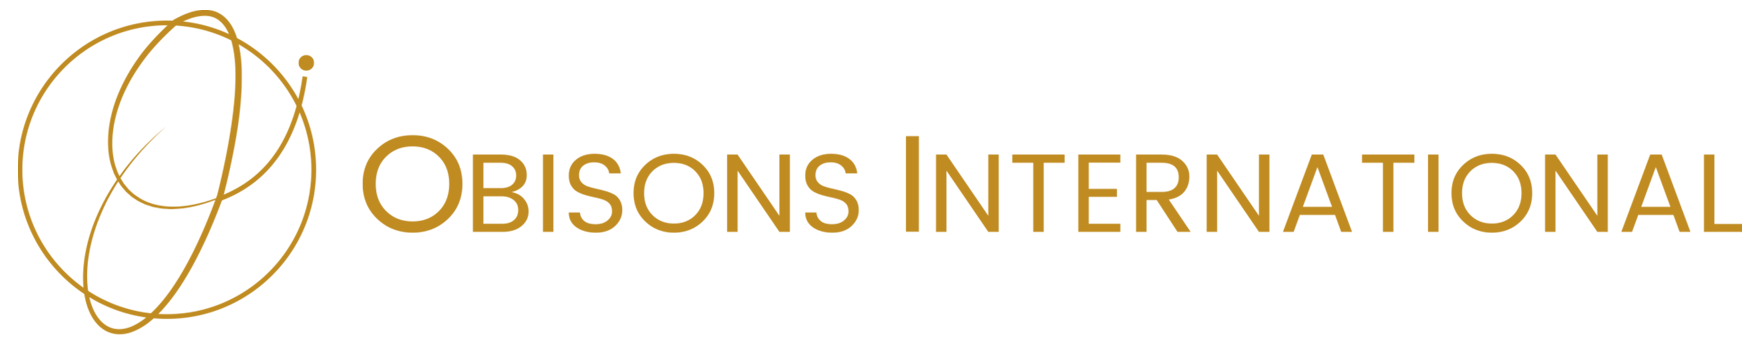 Obisons International